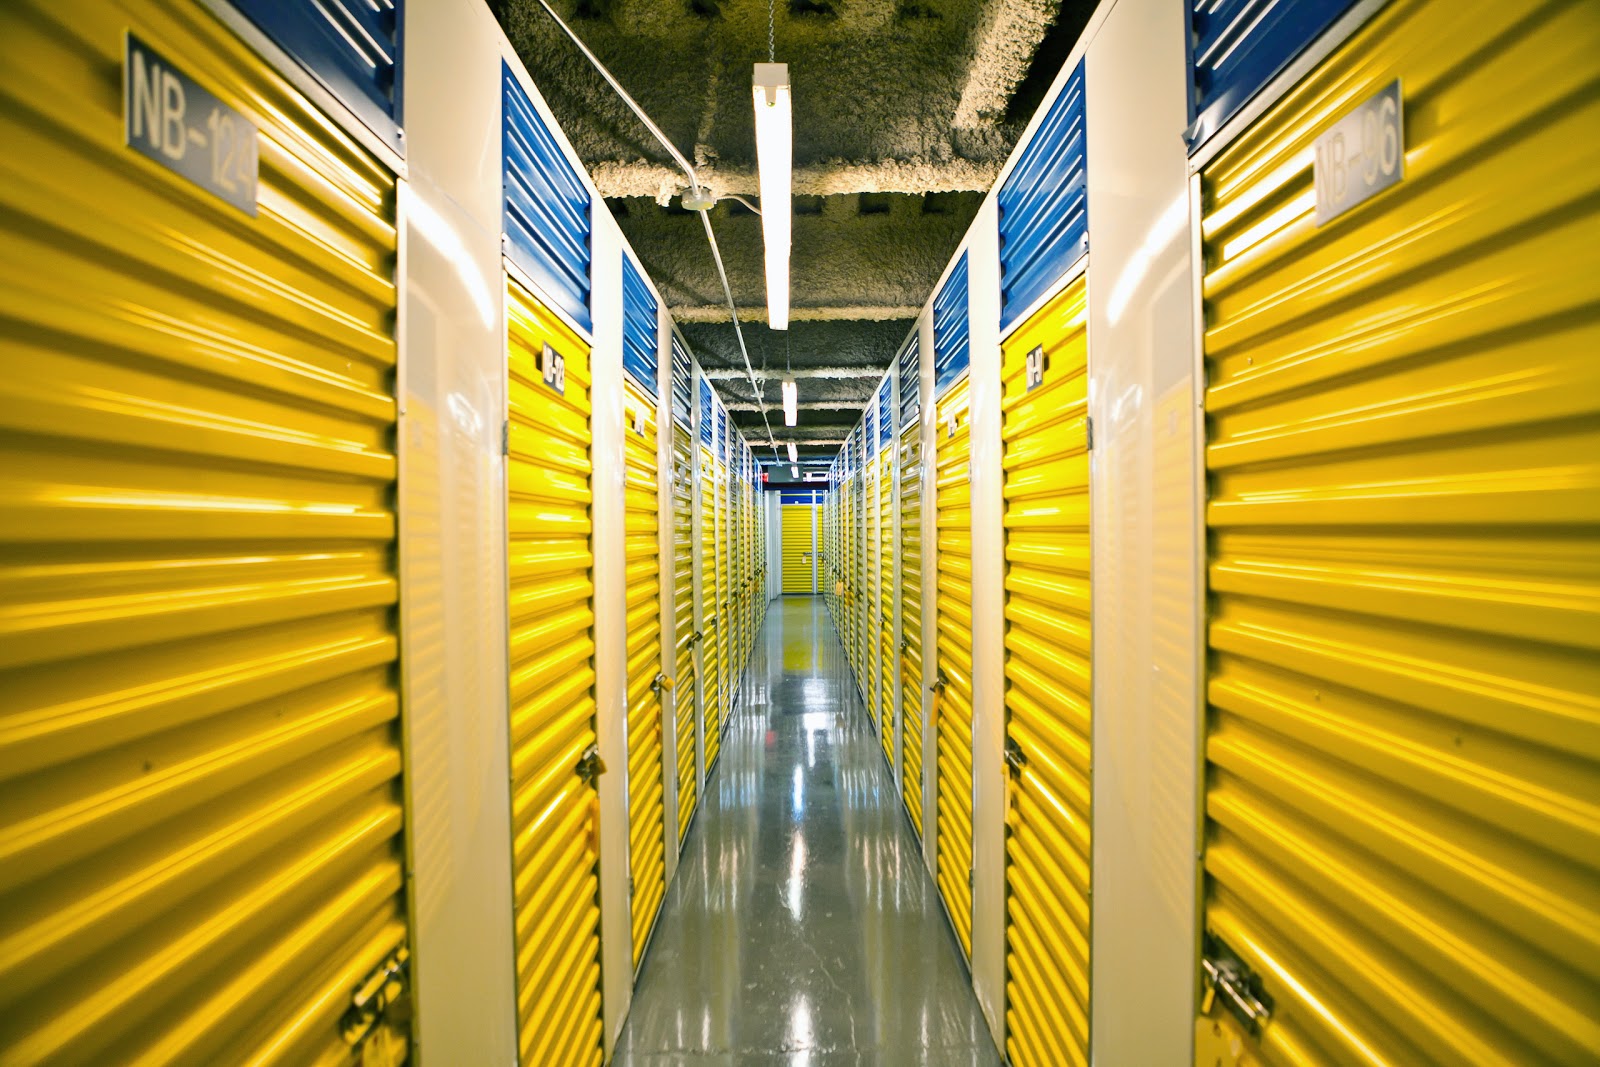 Photo of Big Apple Mini Storage in New York City, New York, United States - 1 Picture of Point of interest, Establishment, Storage